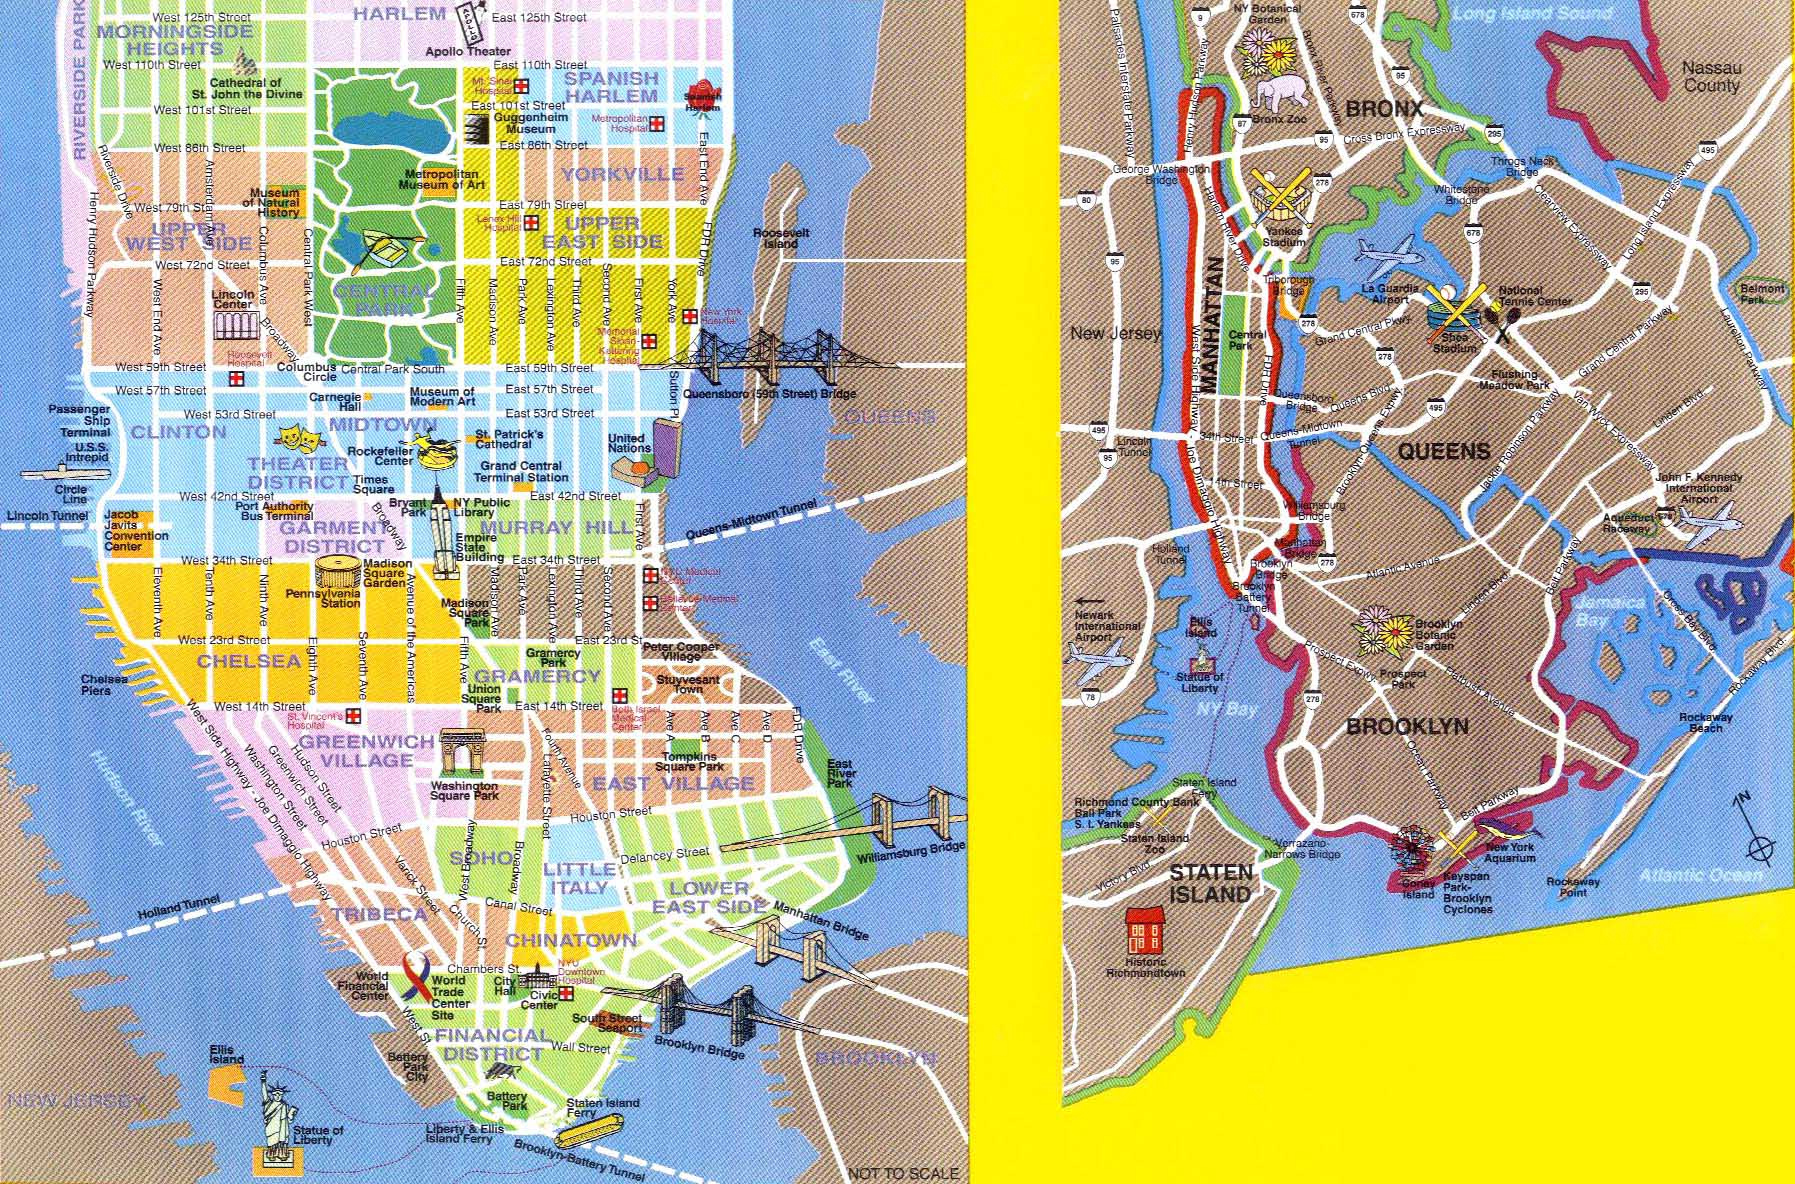 Maps Street Map Of New York City